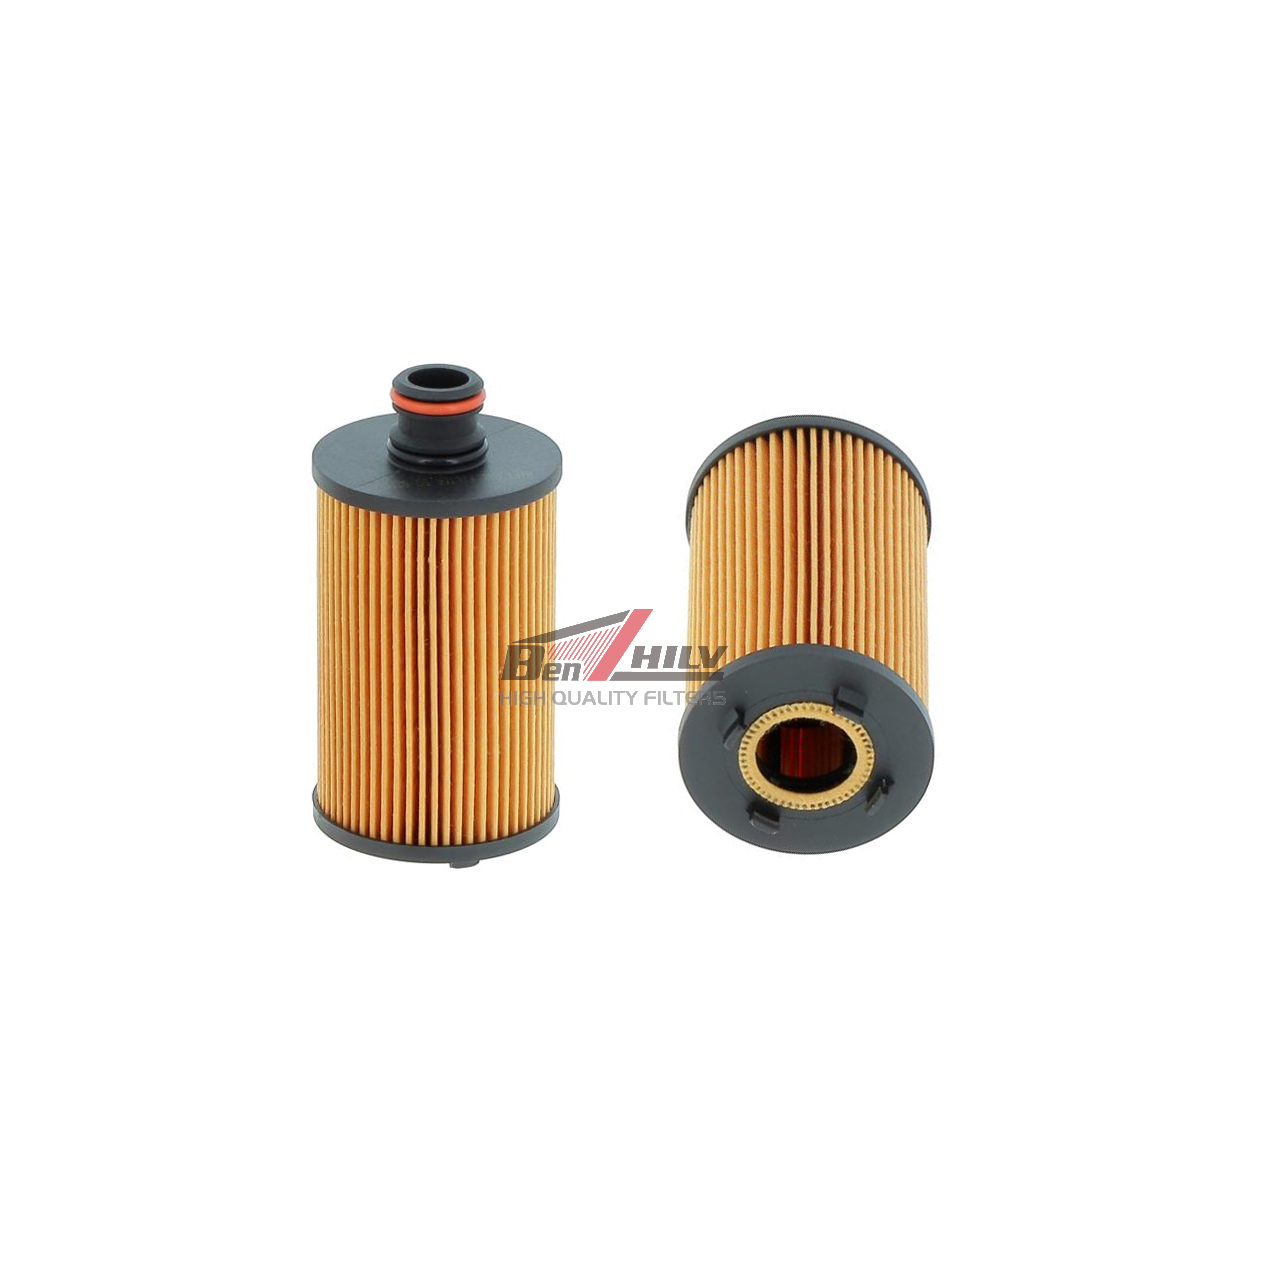 E950HD485 Lubricate the oil filter element